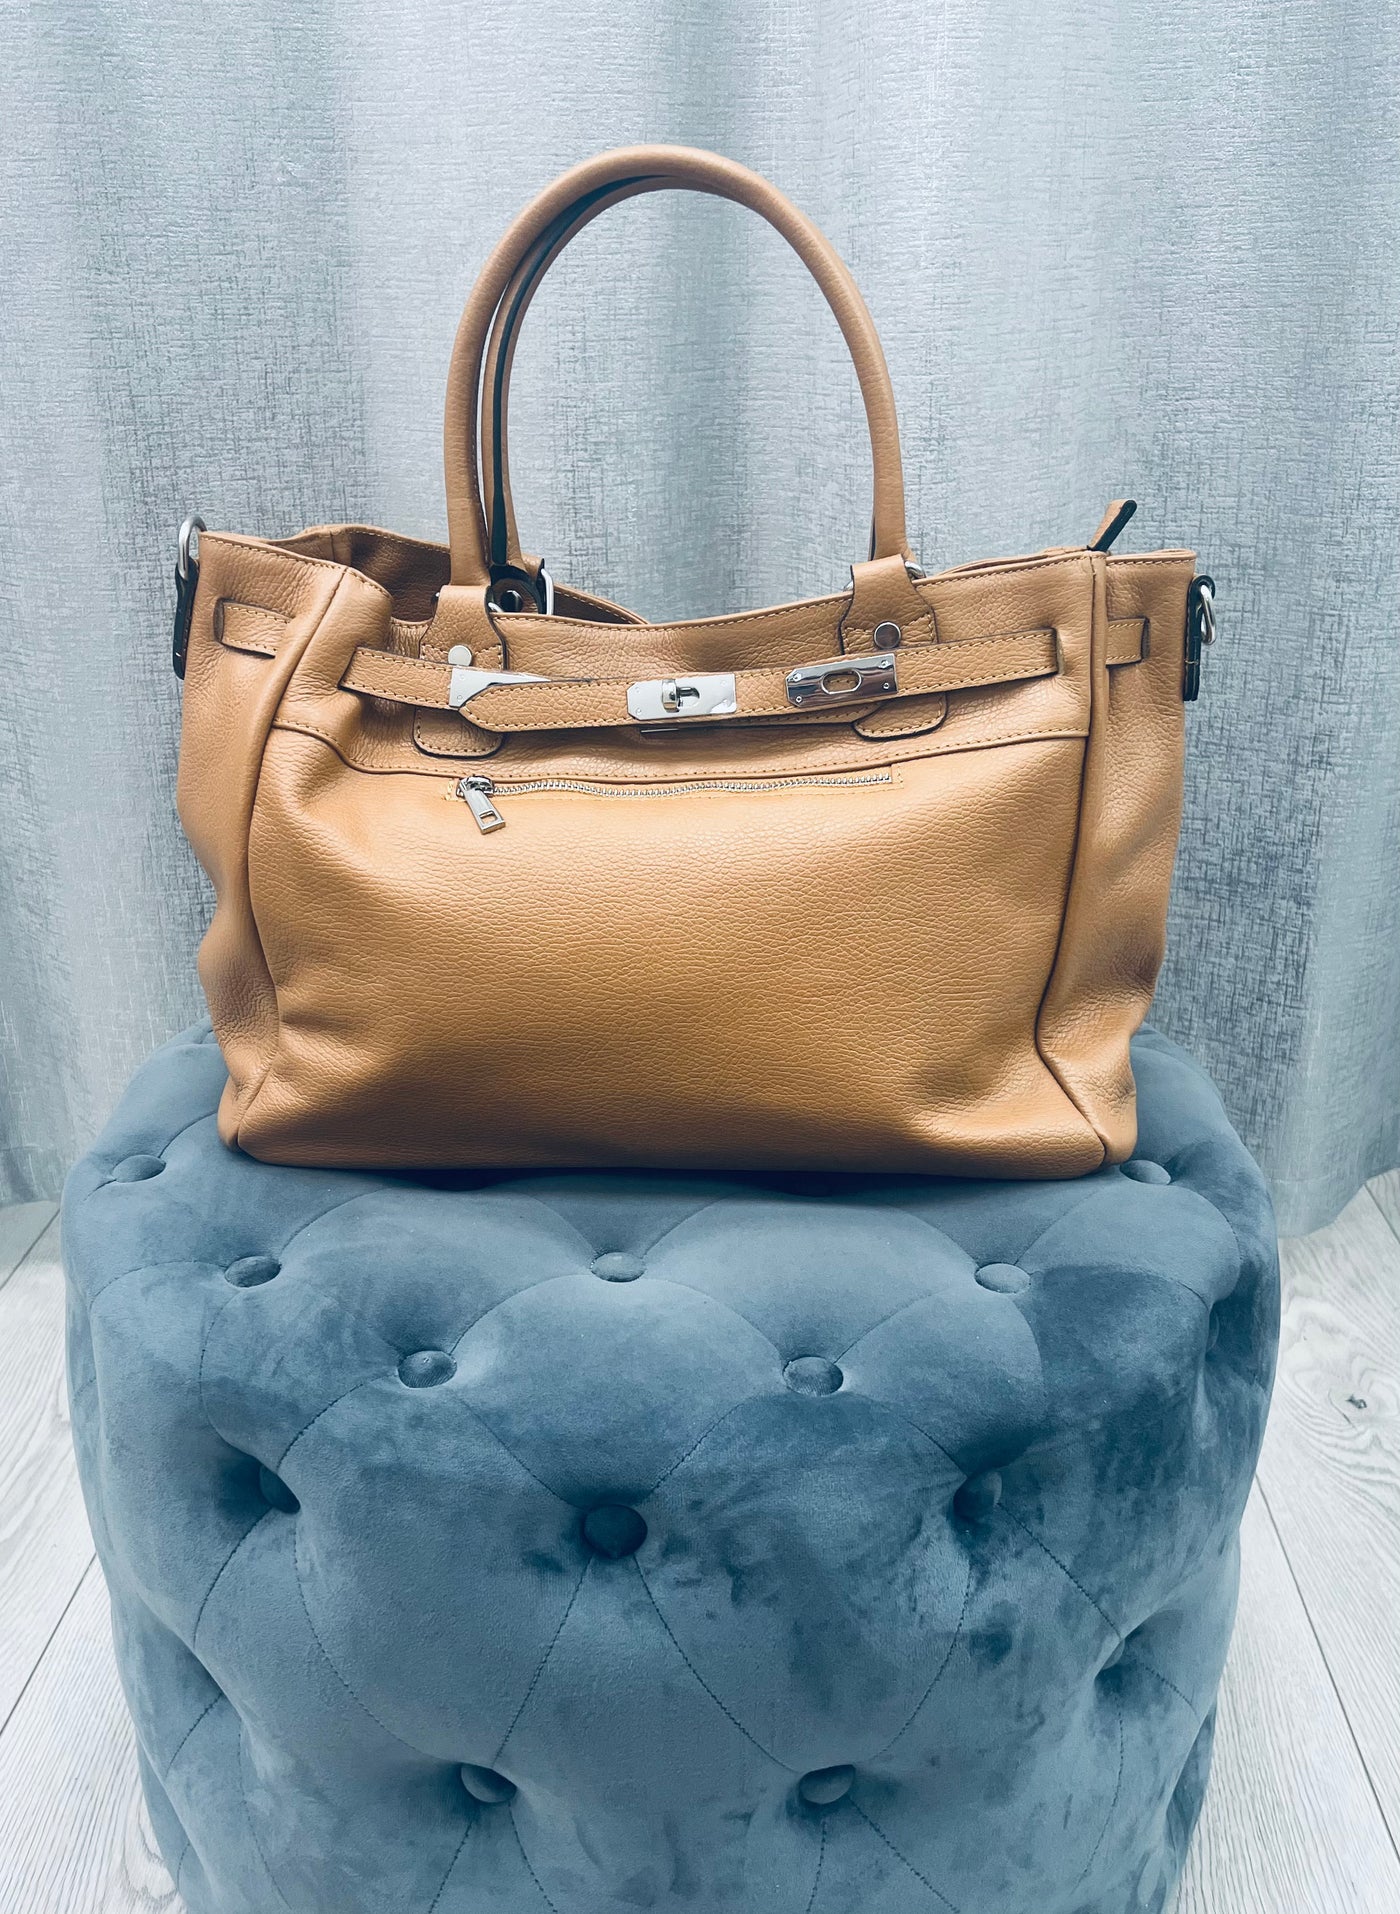 Women's Italian leather bag